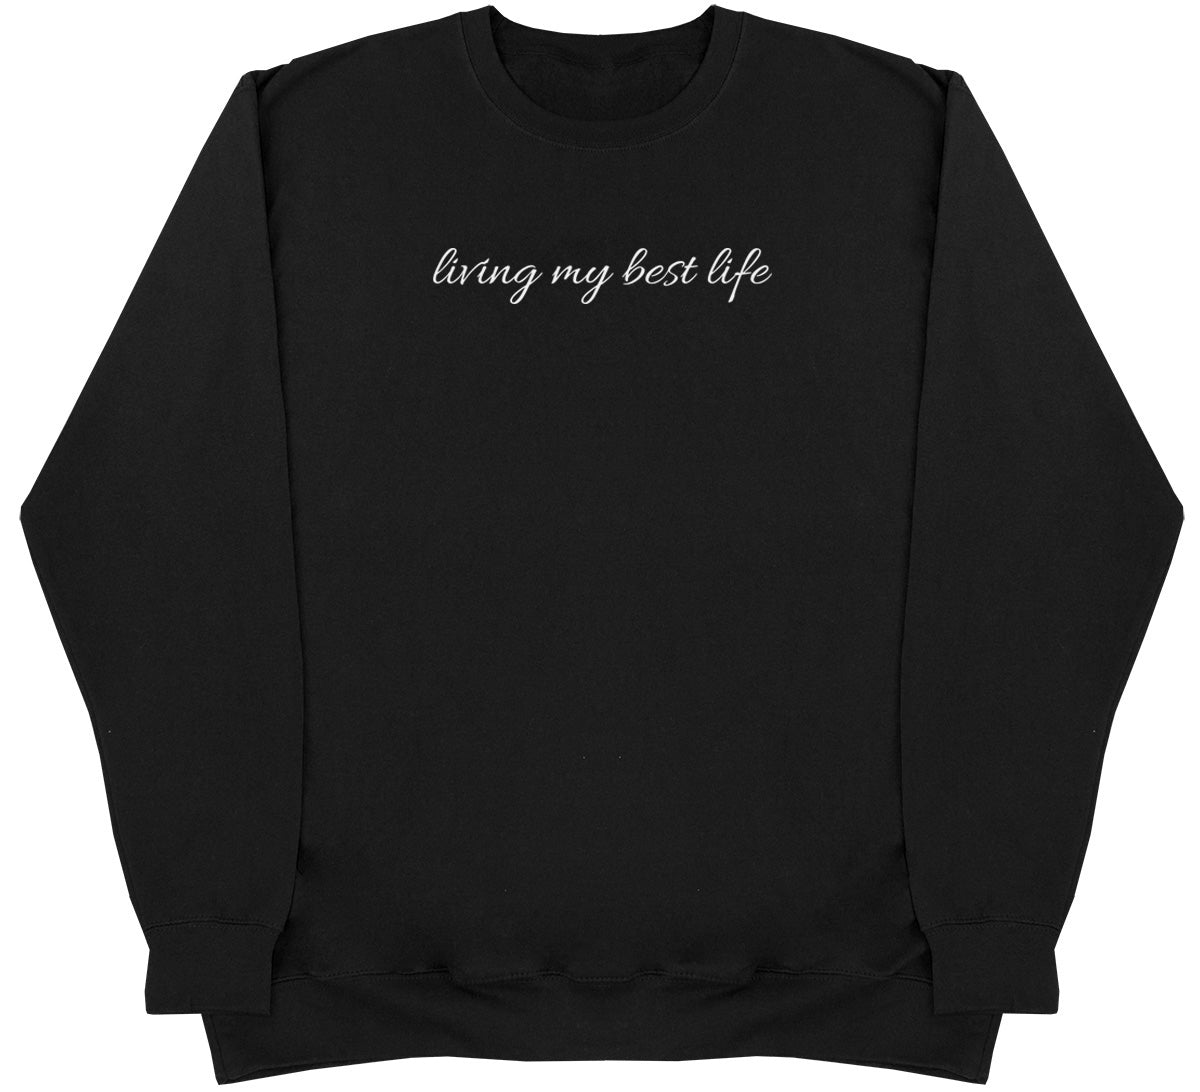 Living My Best Life - Huge Oversized Comfy Original Sweater